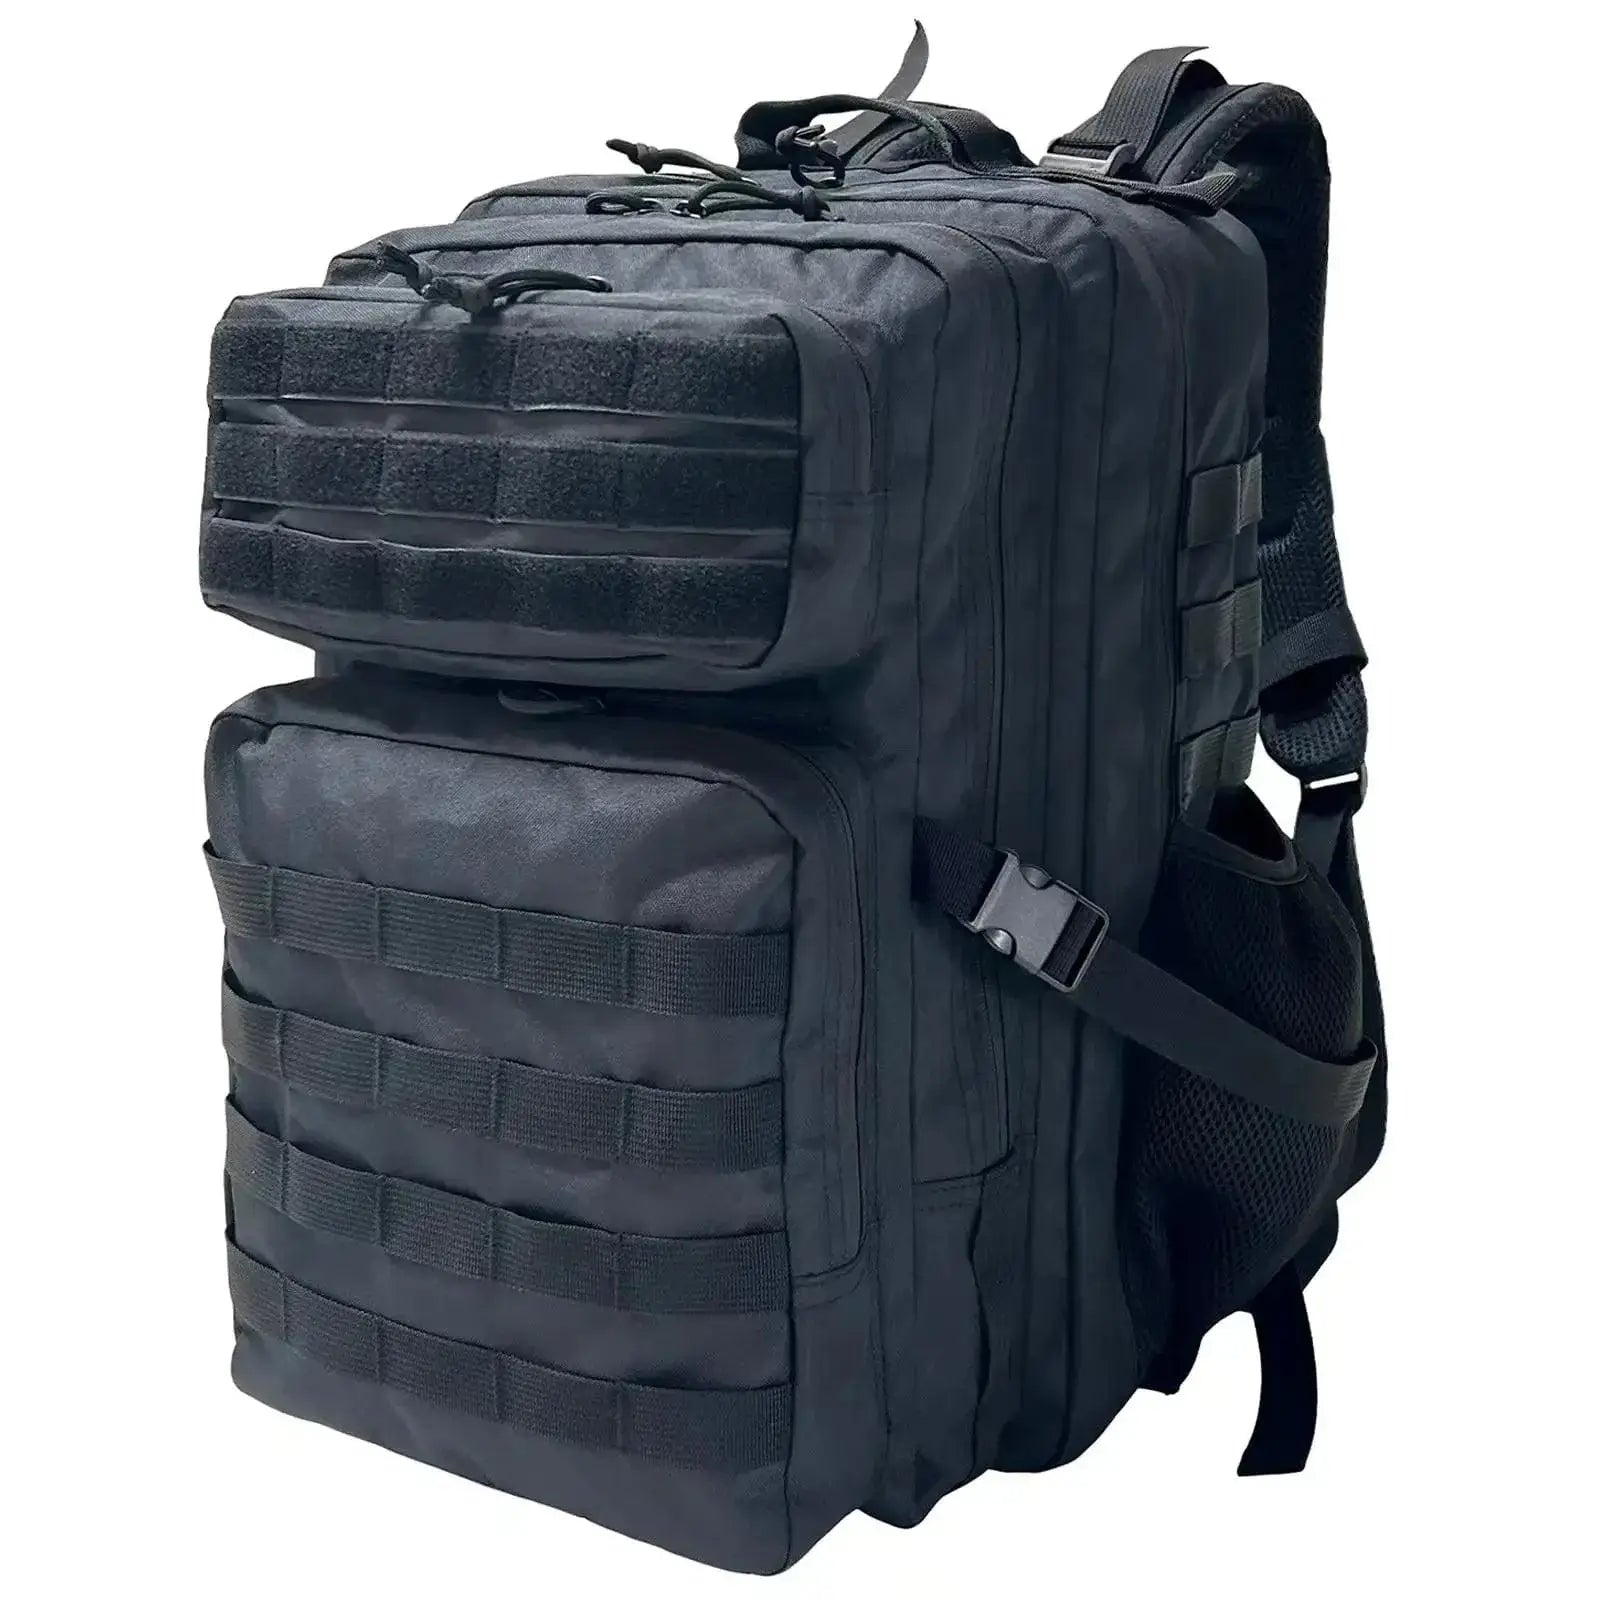 LiveSport Black 50L / CHINA Lawaia Tactical Backpacks 30L/50L Outdoor Rucksacks Camping Hiking Trekking Fishing Hunting Bag with Bottle Holder